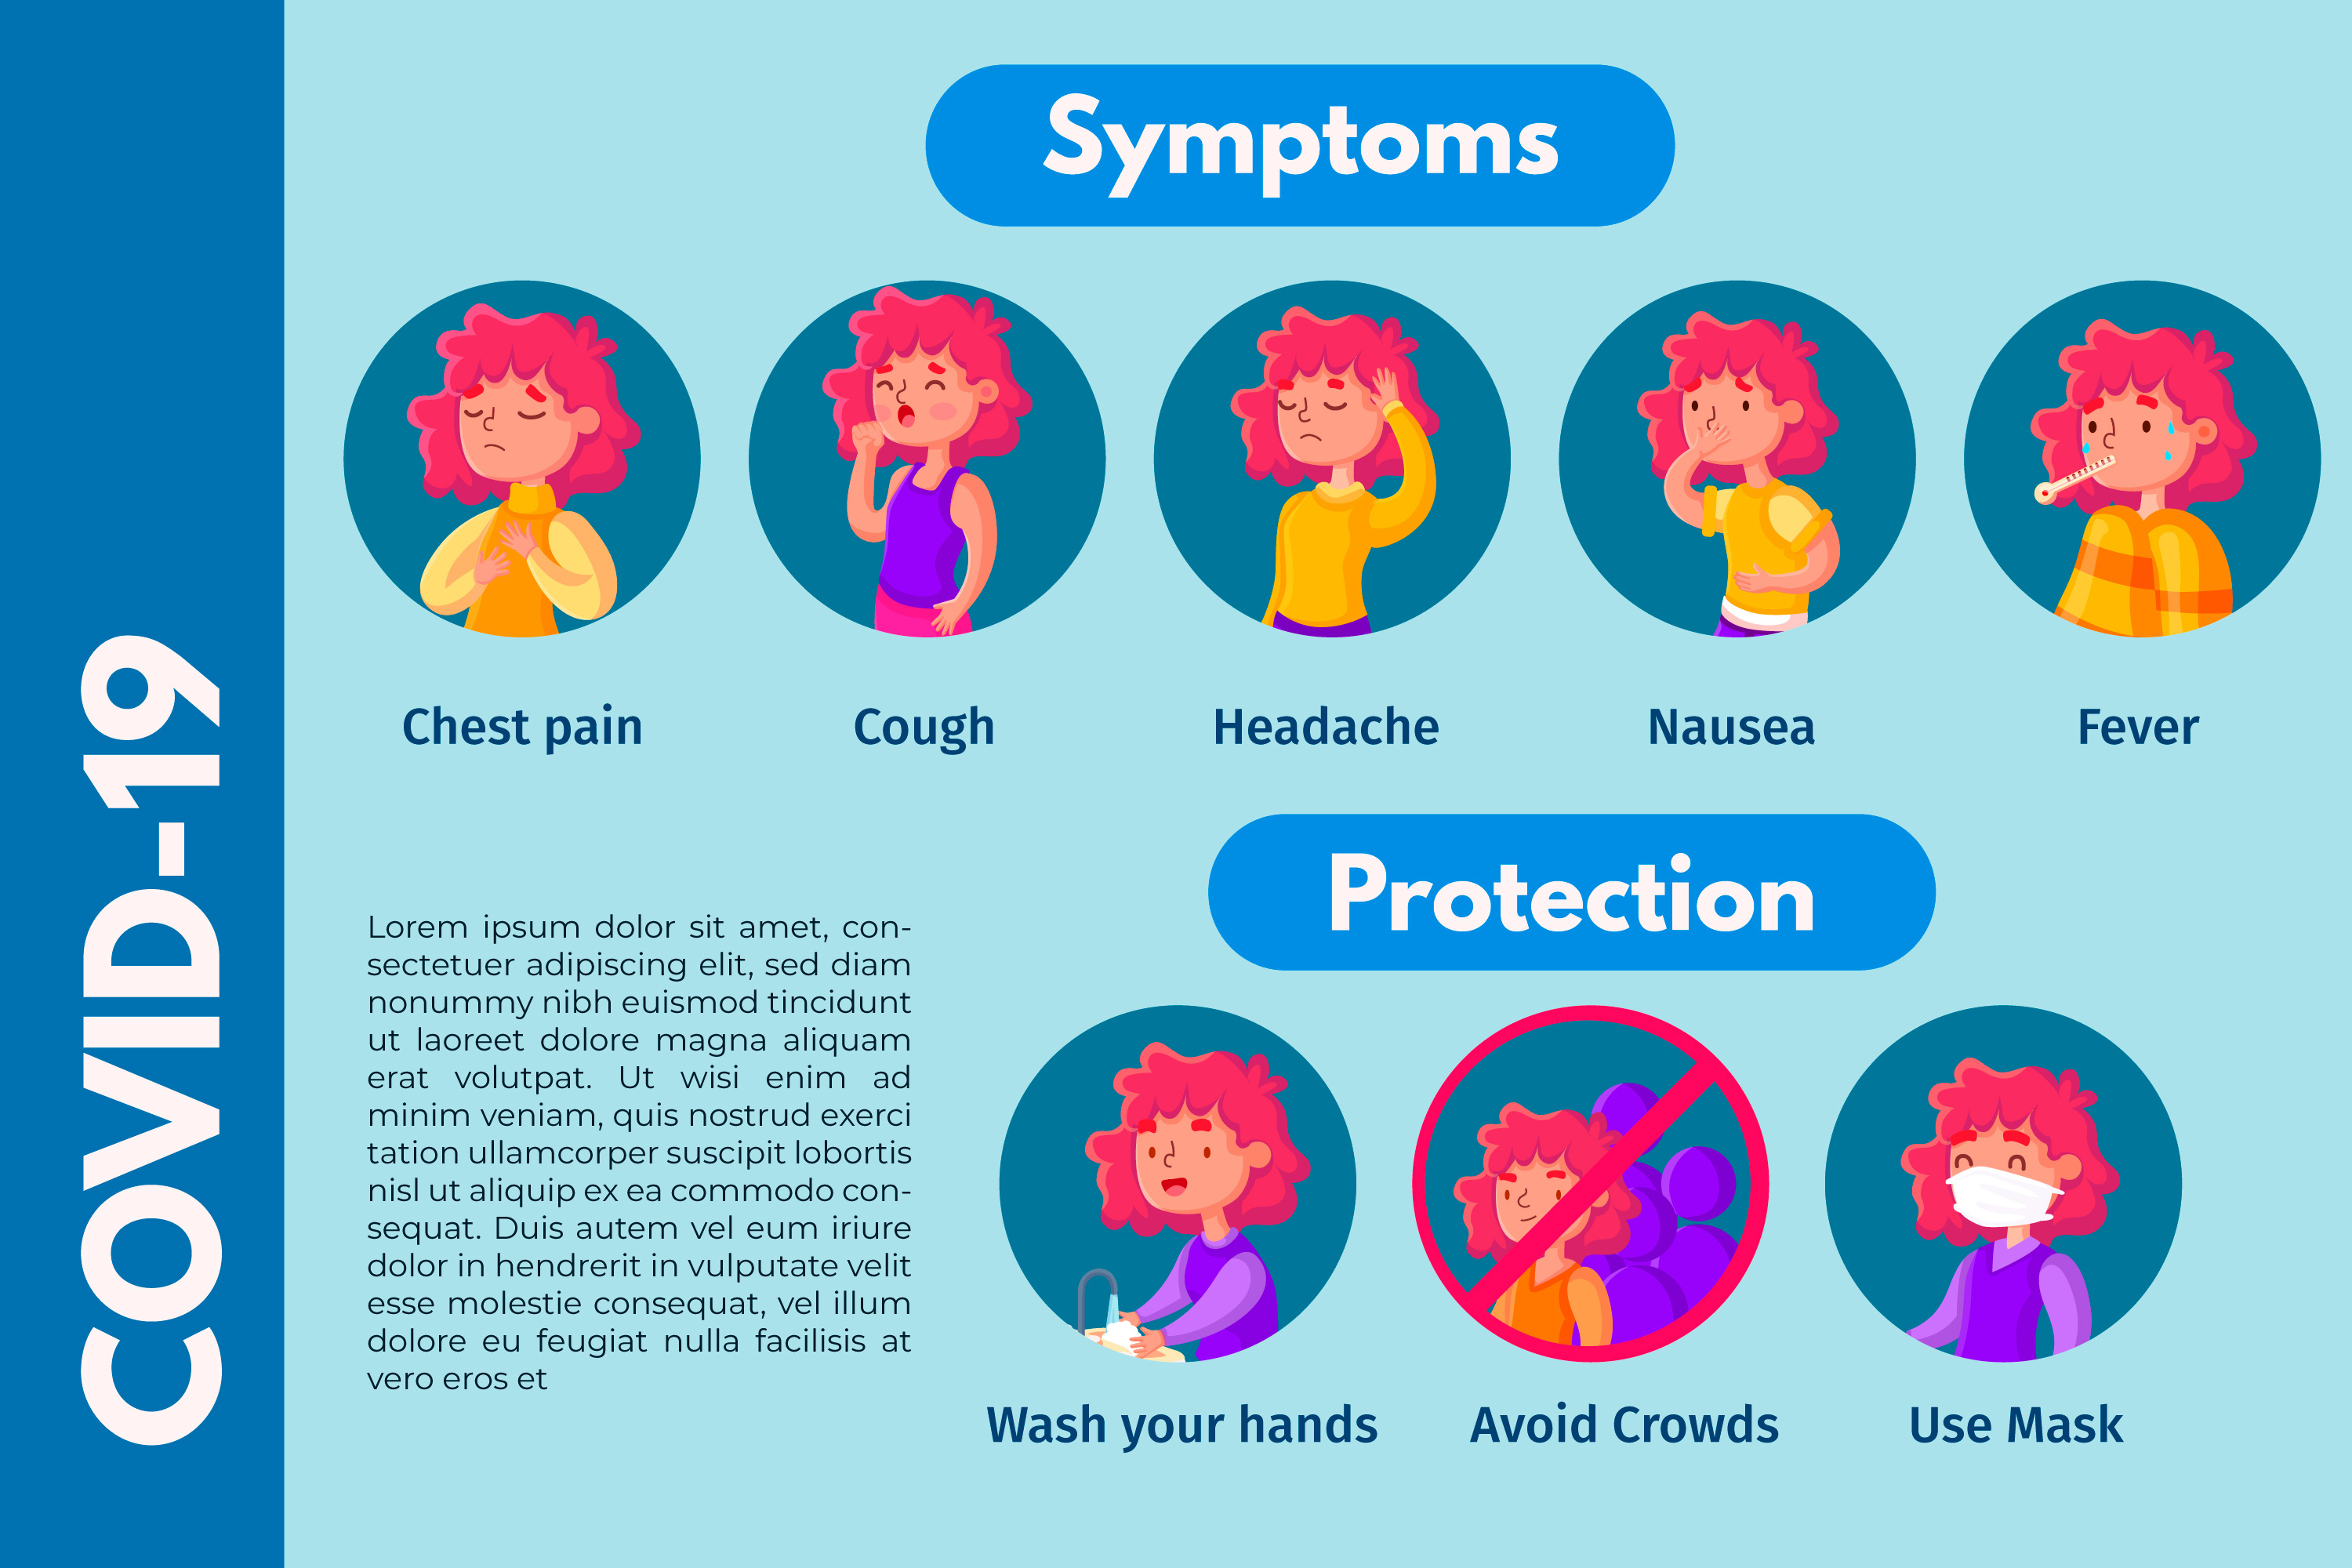 Allergic Rhinitis in Children: Symptoms and Management